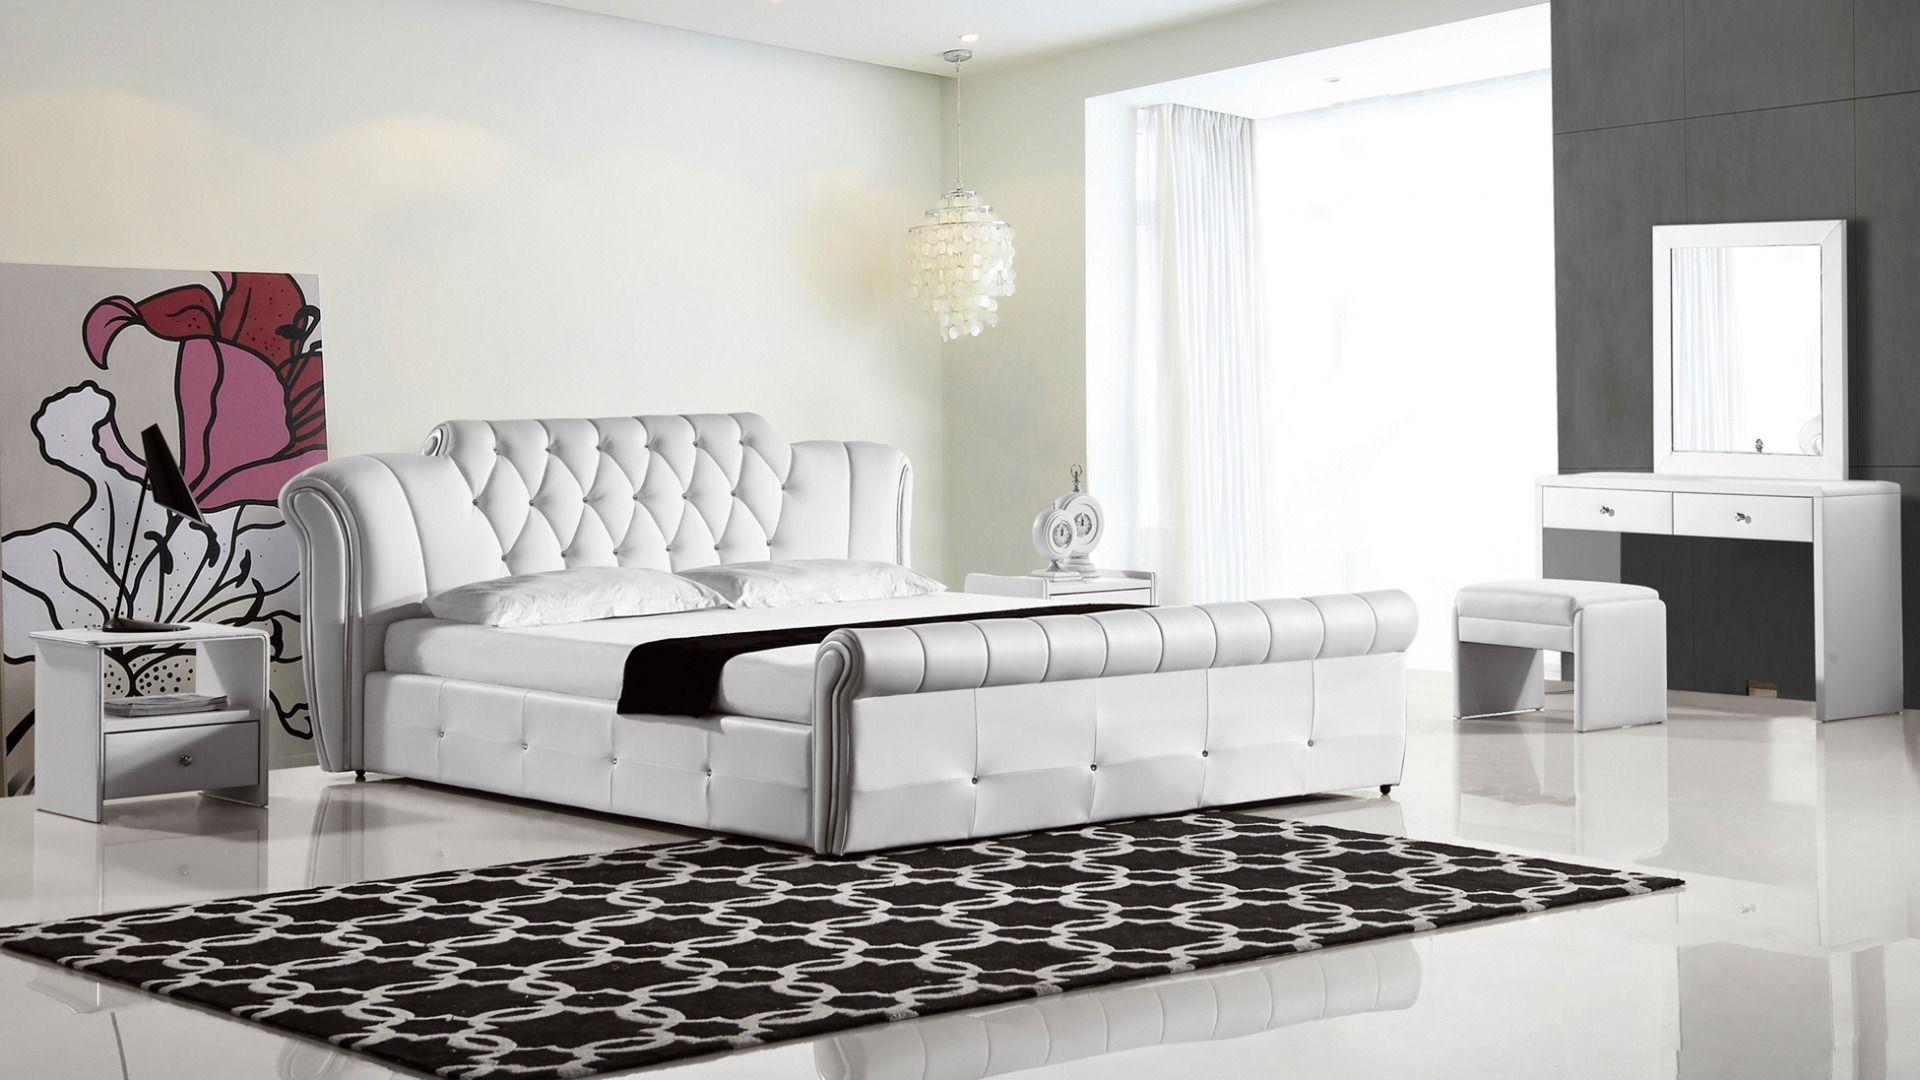 

    
American Eagle Furniture B-D032-W-EK Platform Bed White B-D032-W-EK
